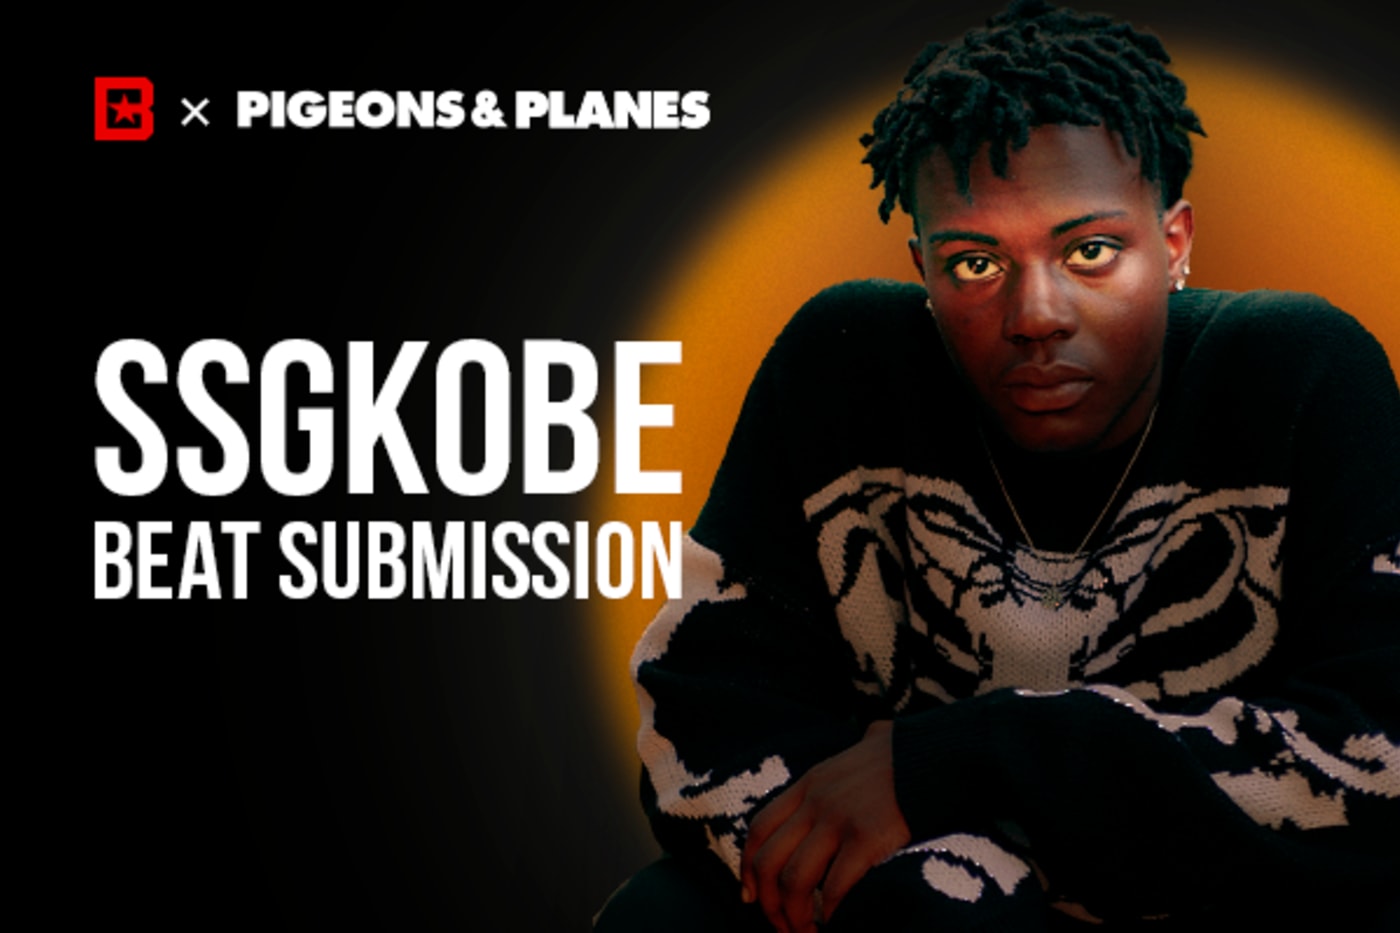 BeatStars SSGKobe Pigeons & Planes submissions